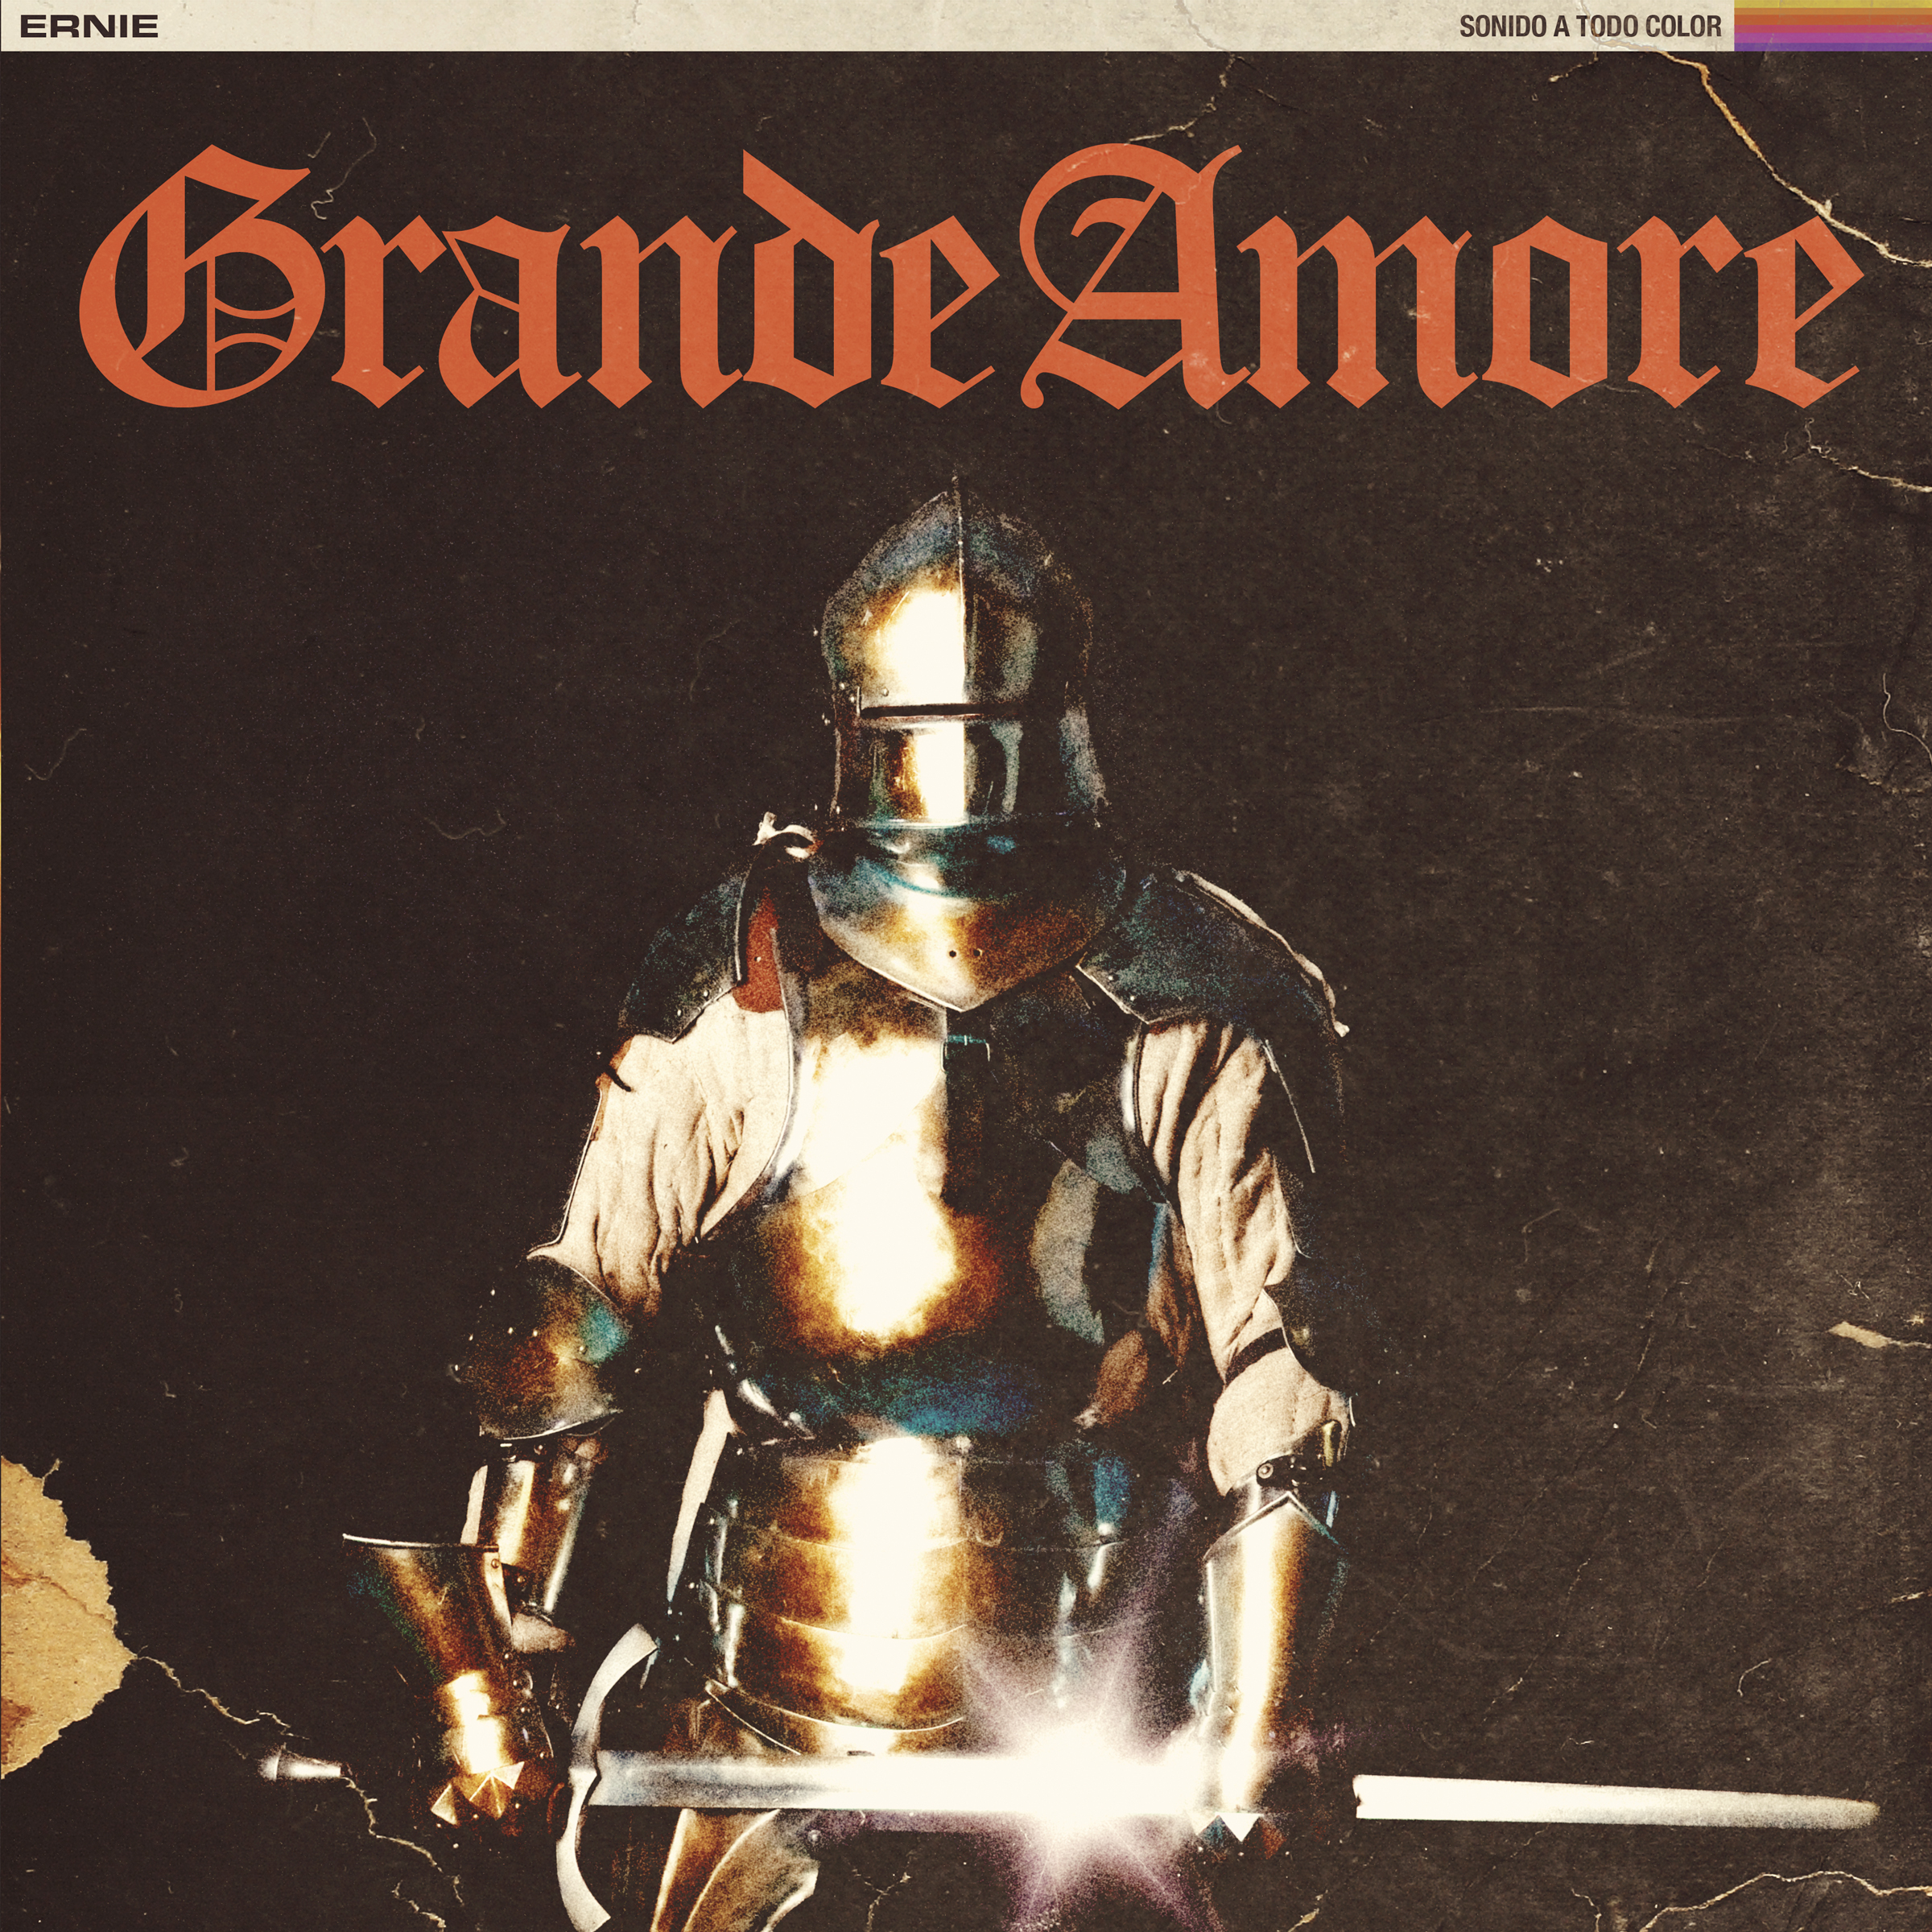 Grande Amore "Grande Amore" LP